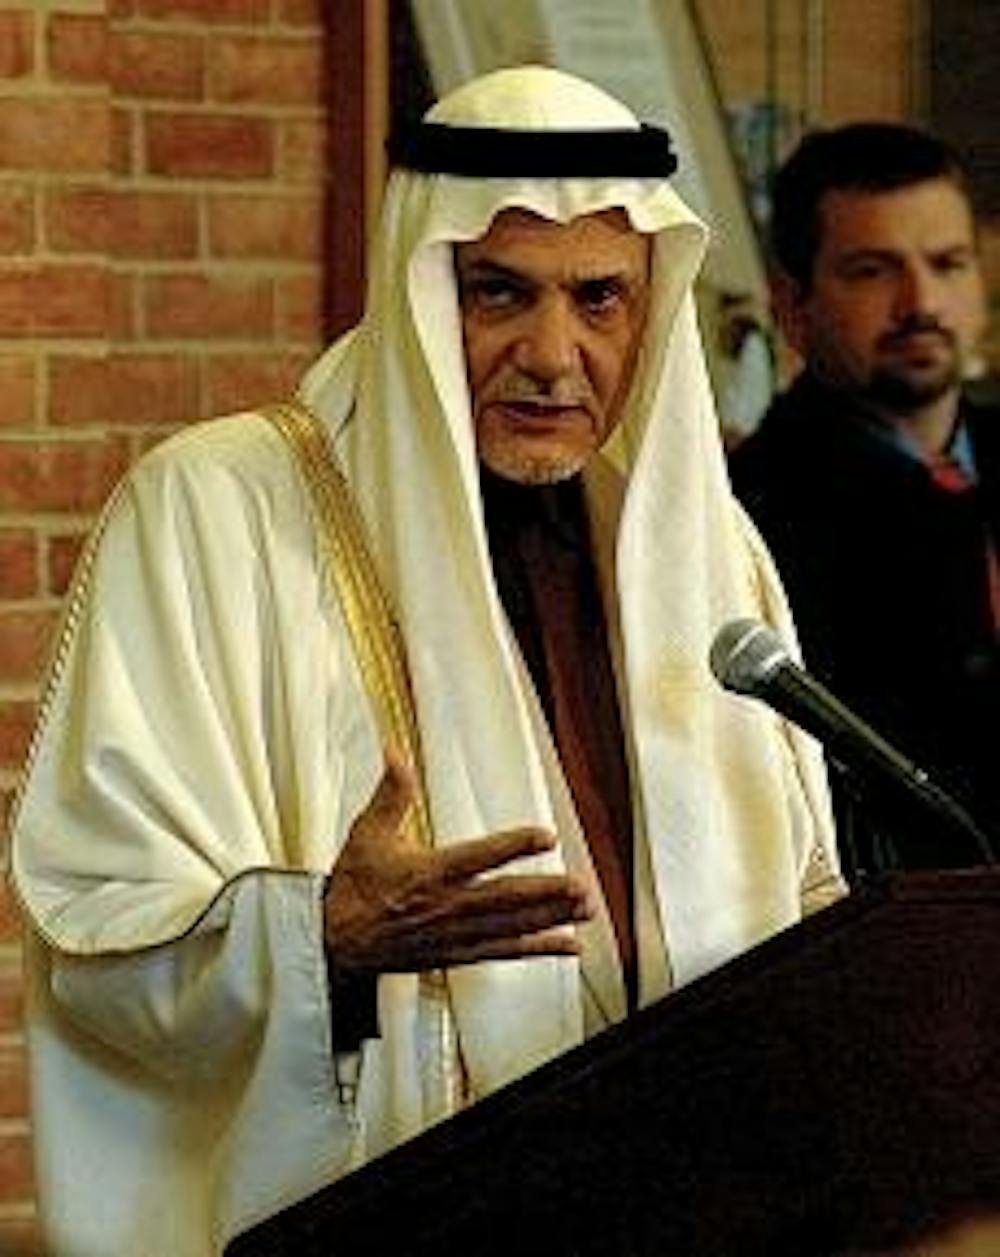 U.S.-Saudi AmbassadorTurki Al-Faisal emphasized the need for understanding in a speech on Friday.